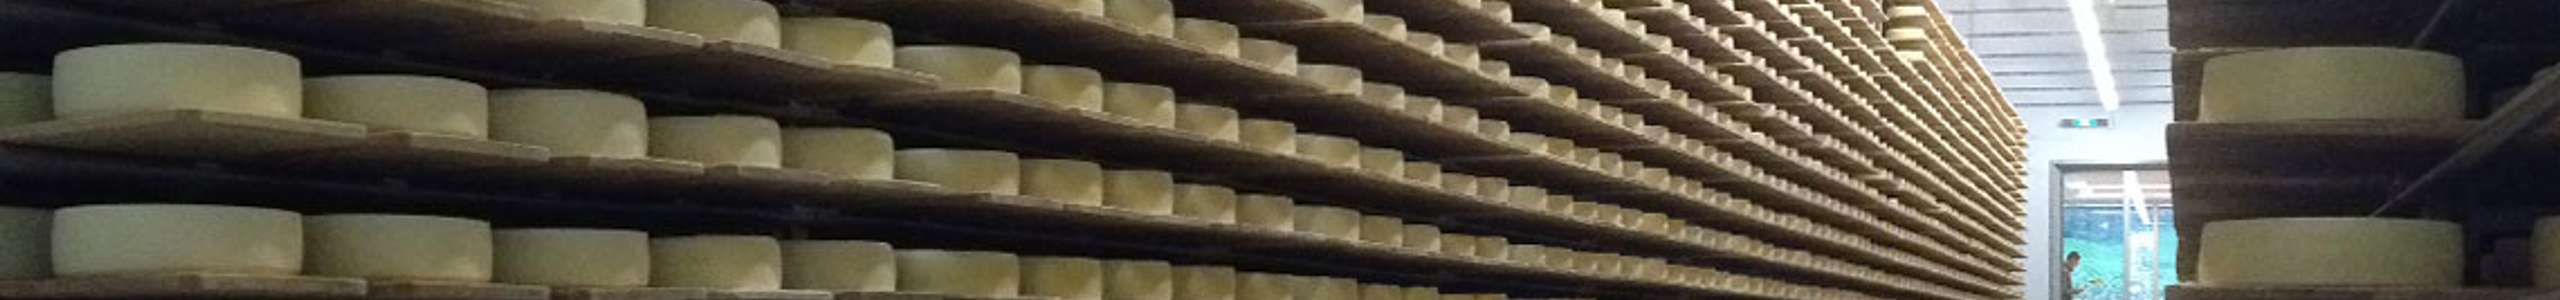 A diagonal glance at cheese racks